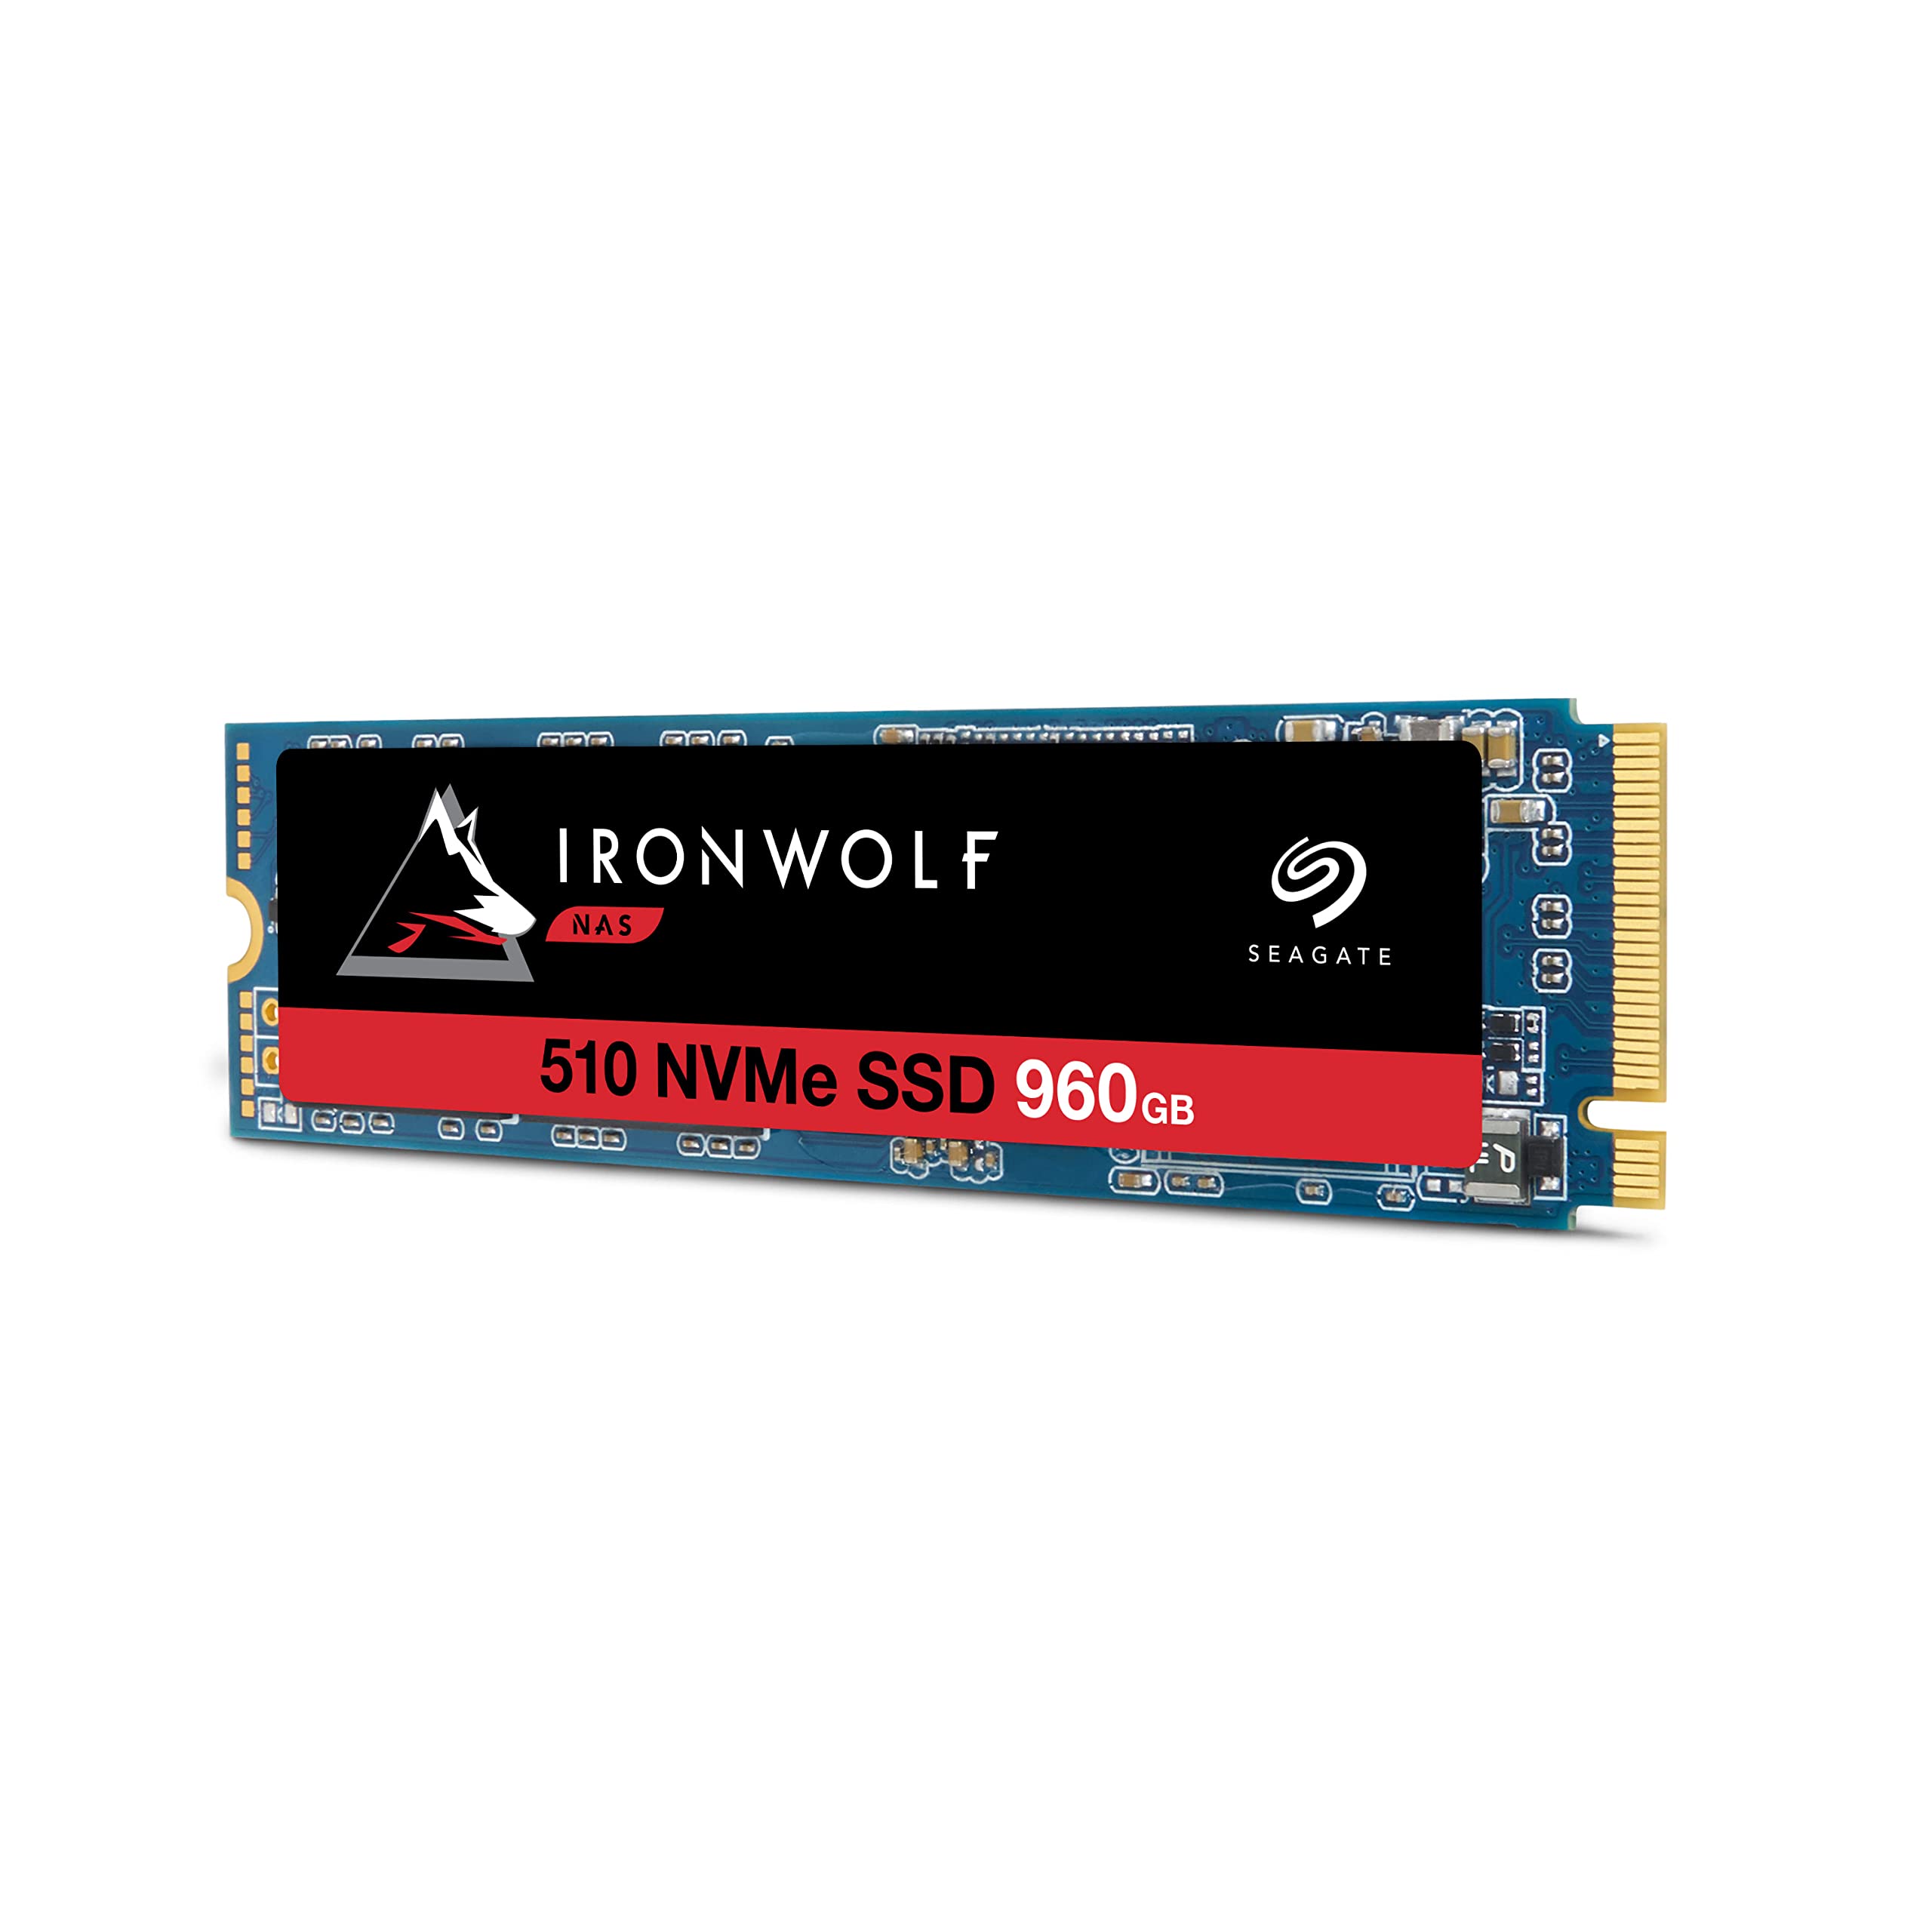 IRONWOLF 510 NVME SSD 960GB